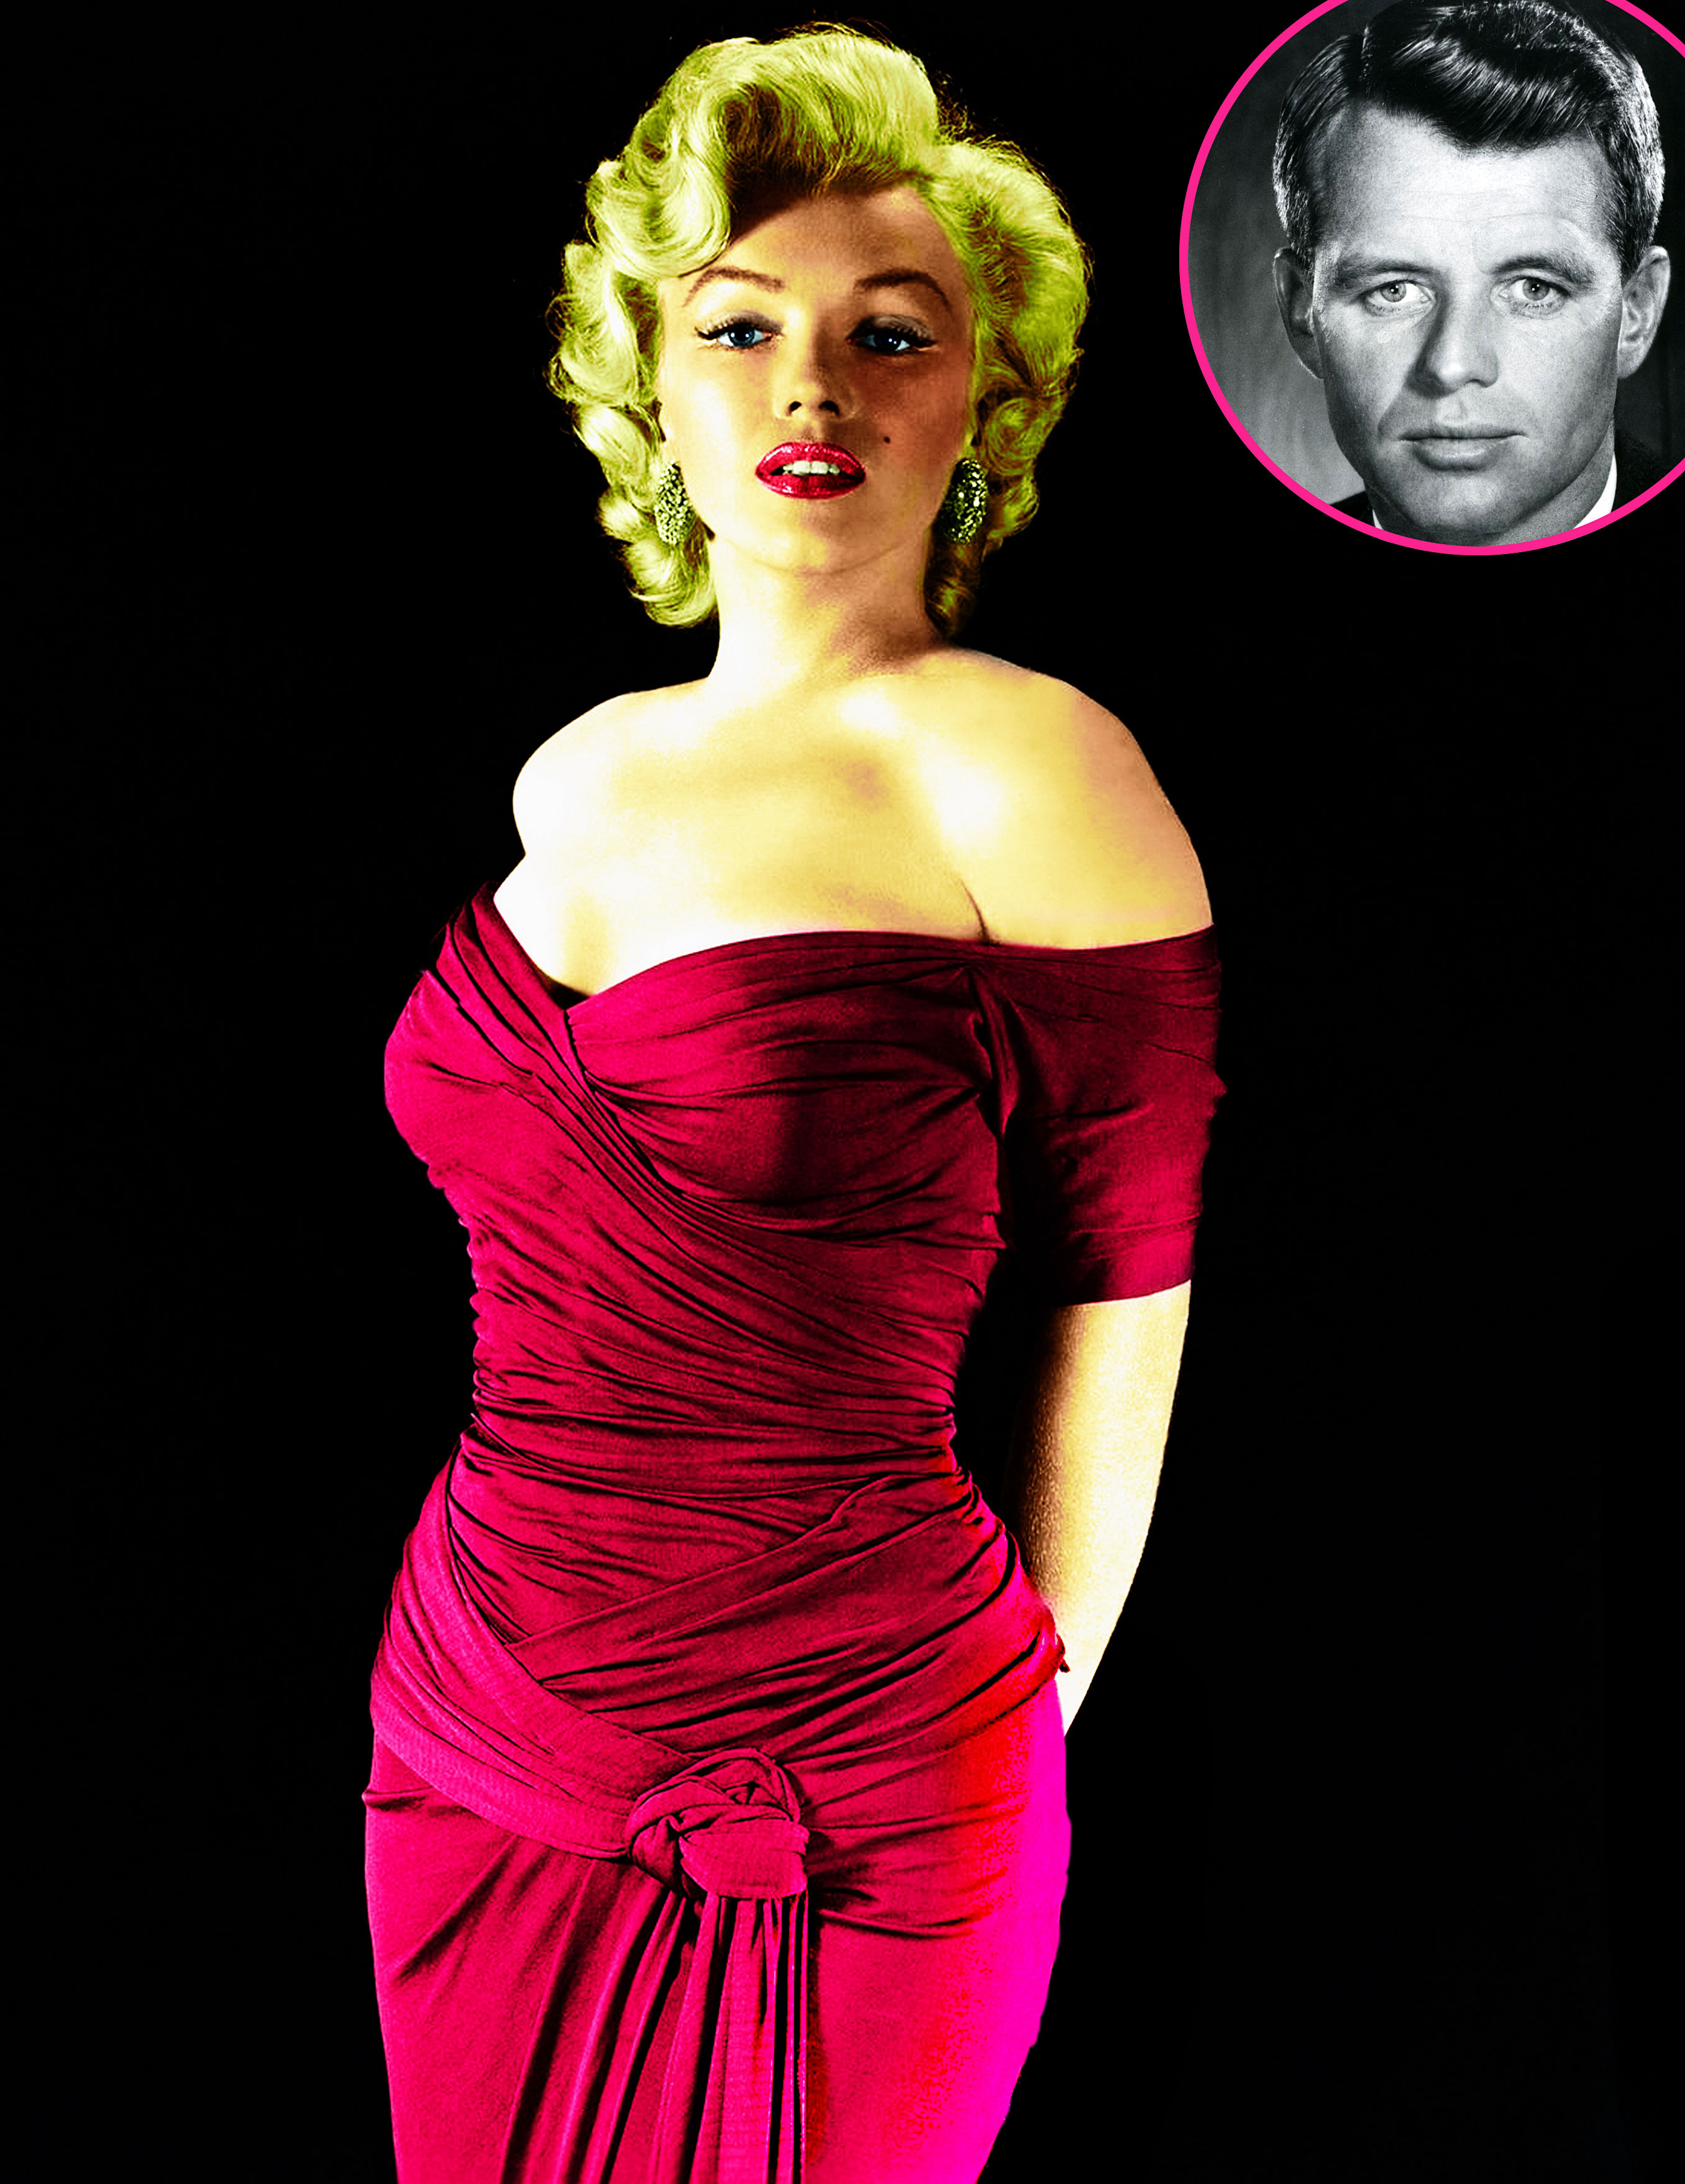 https://www.usmagazine.com/wp-content/uploads/2019/10/Marilyn-Monroe-Was-Killed-by-Bobby-Kennedy-01.jpg?quality=62&strip=all